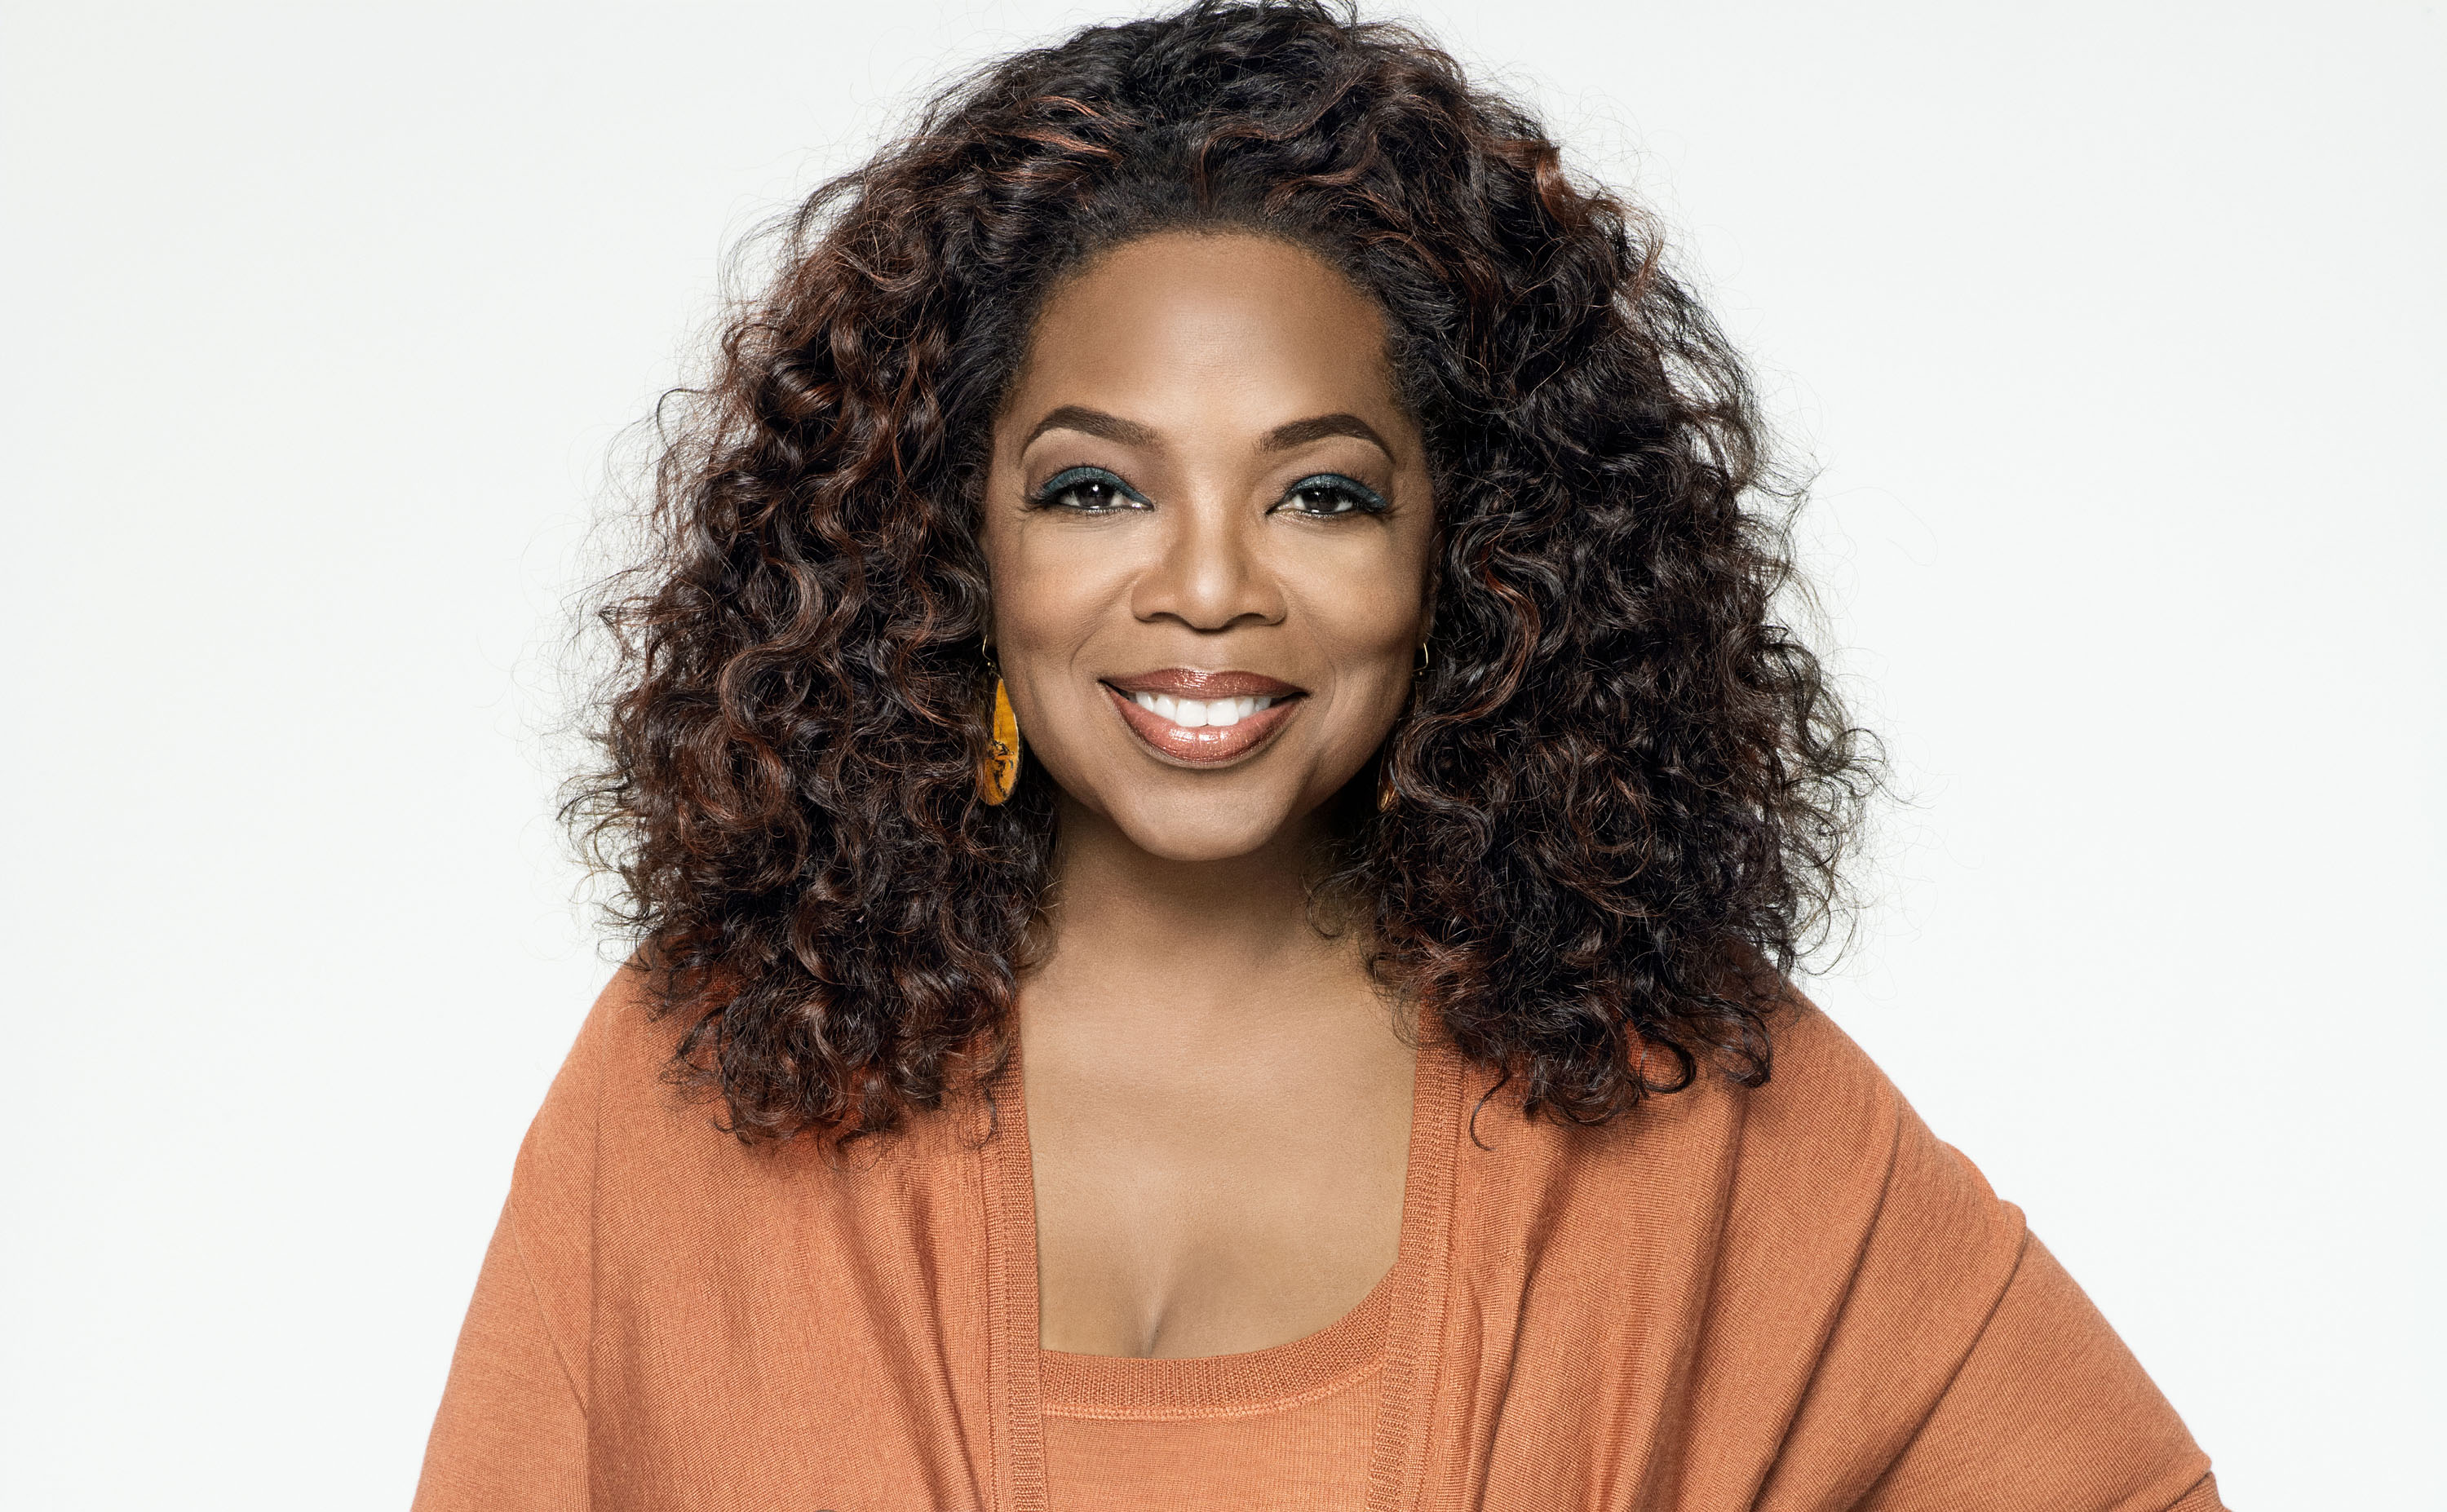 More Beautiful Oprah Winfrey Wallpaper Flgrx Graphics